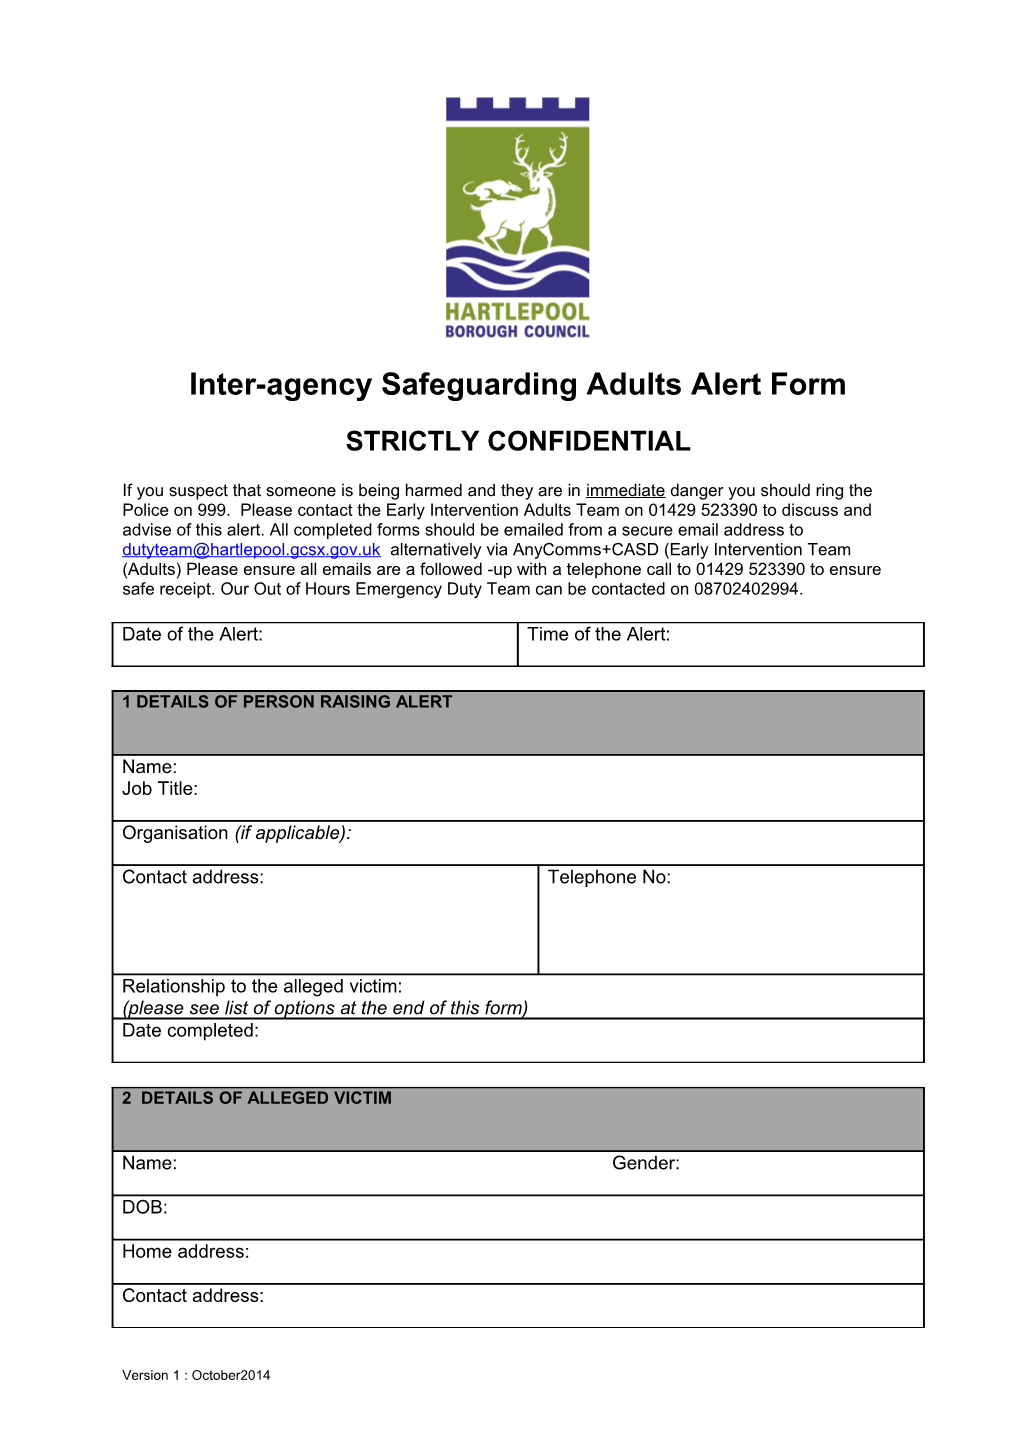 Inter-Agency Safeguarding Adults Alert Form